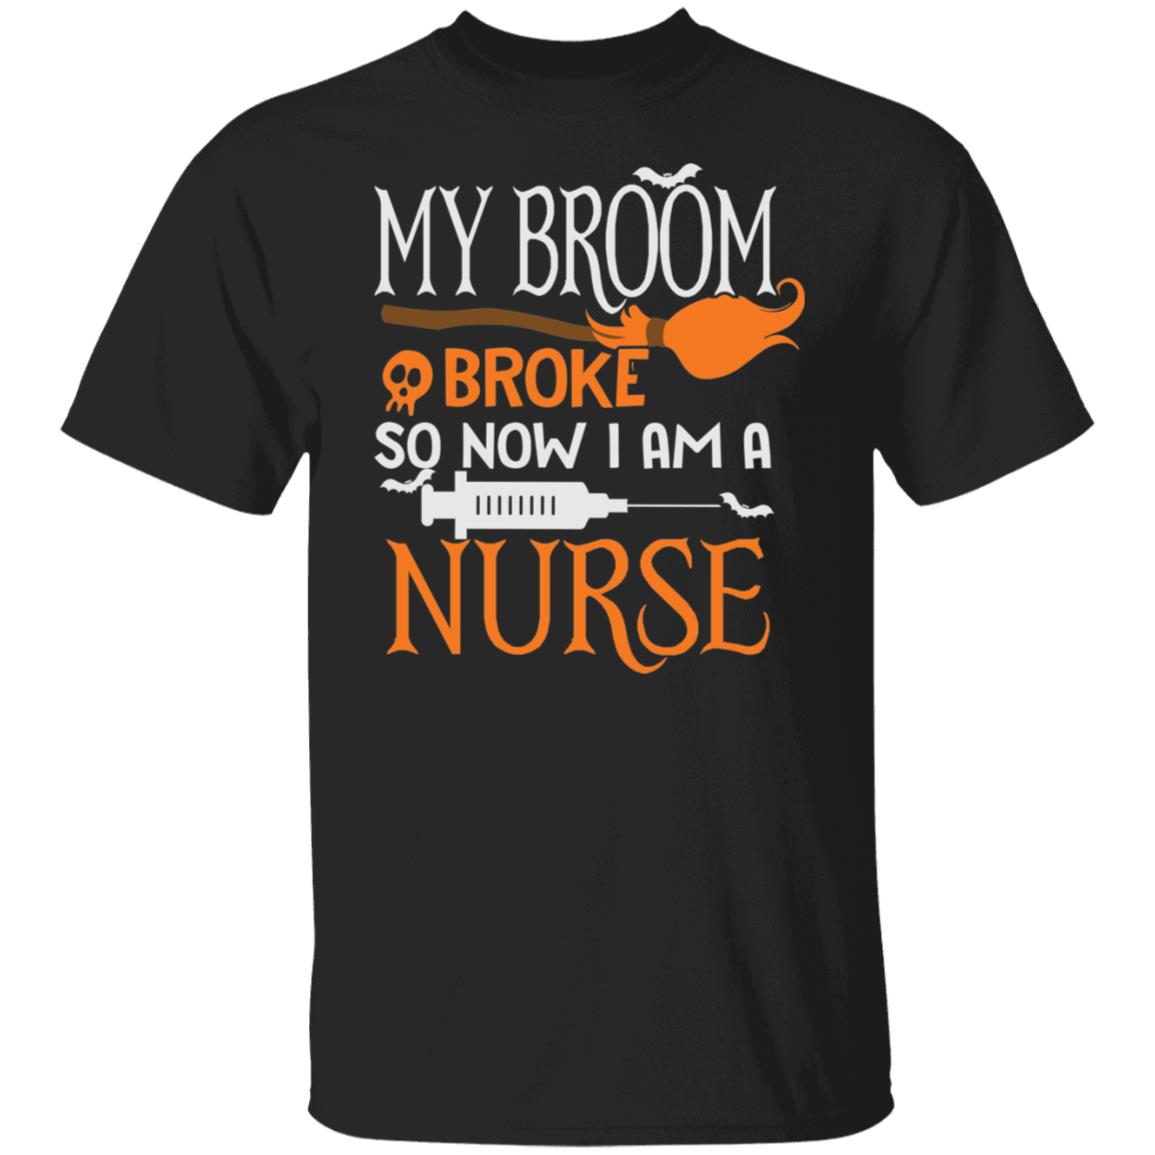 My Broom Broke So Now I am a Nurse Shirt